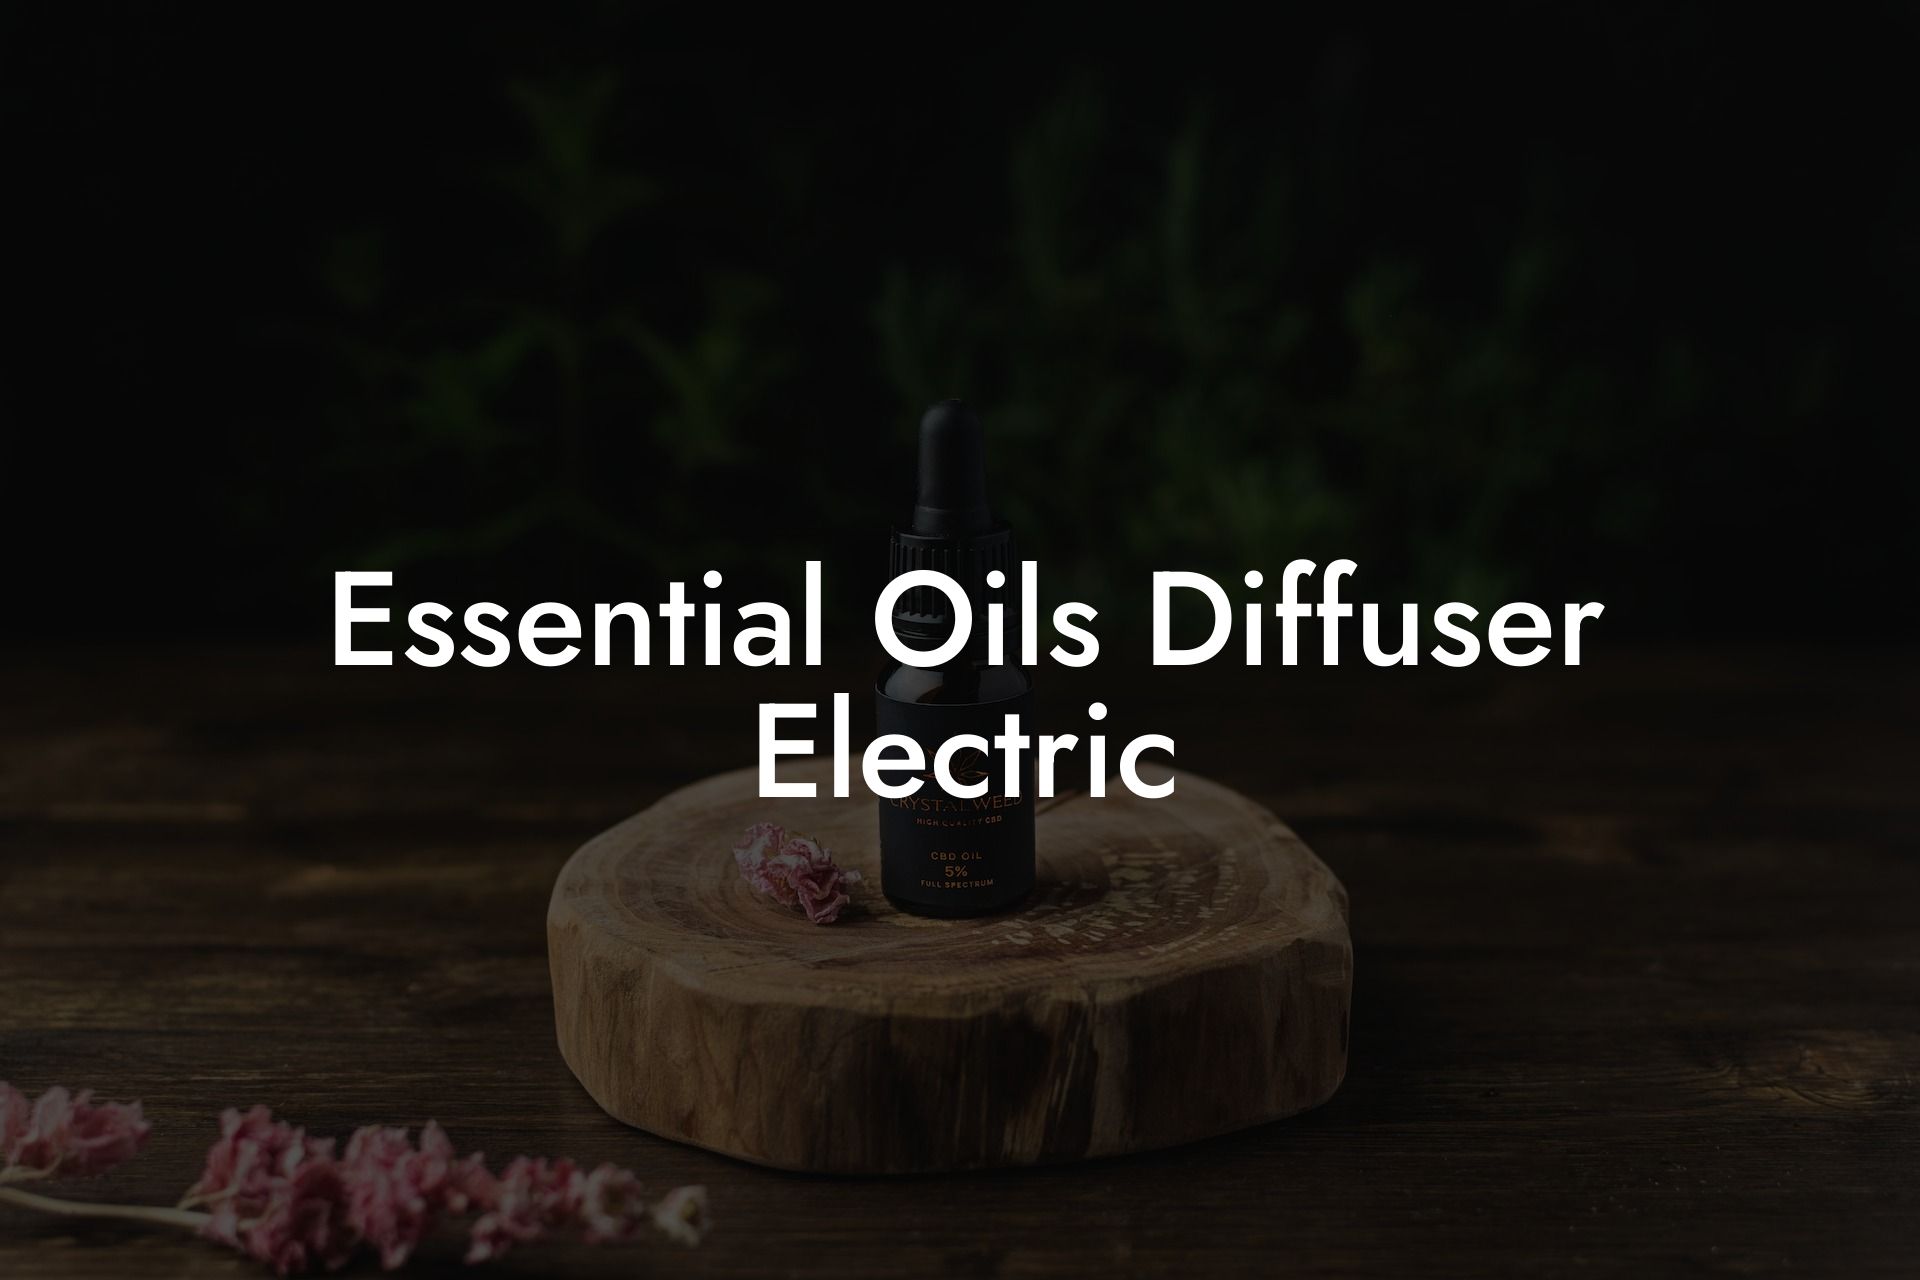 Essential Oils Diffuser Electric